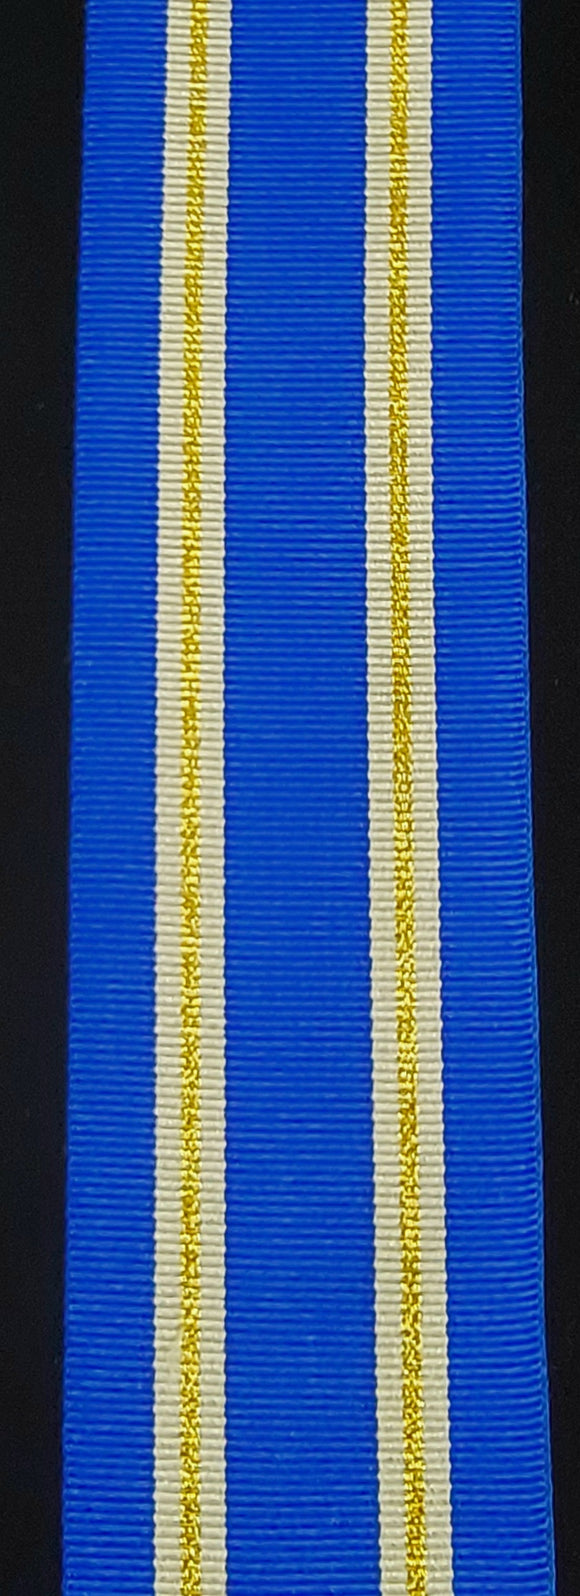 Ribbon, NATO Medal, Article 5 Active Endevour ( 2 Gold Stripes)